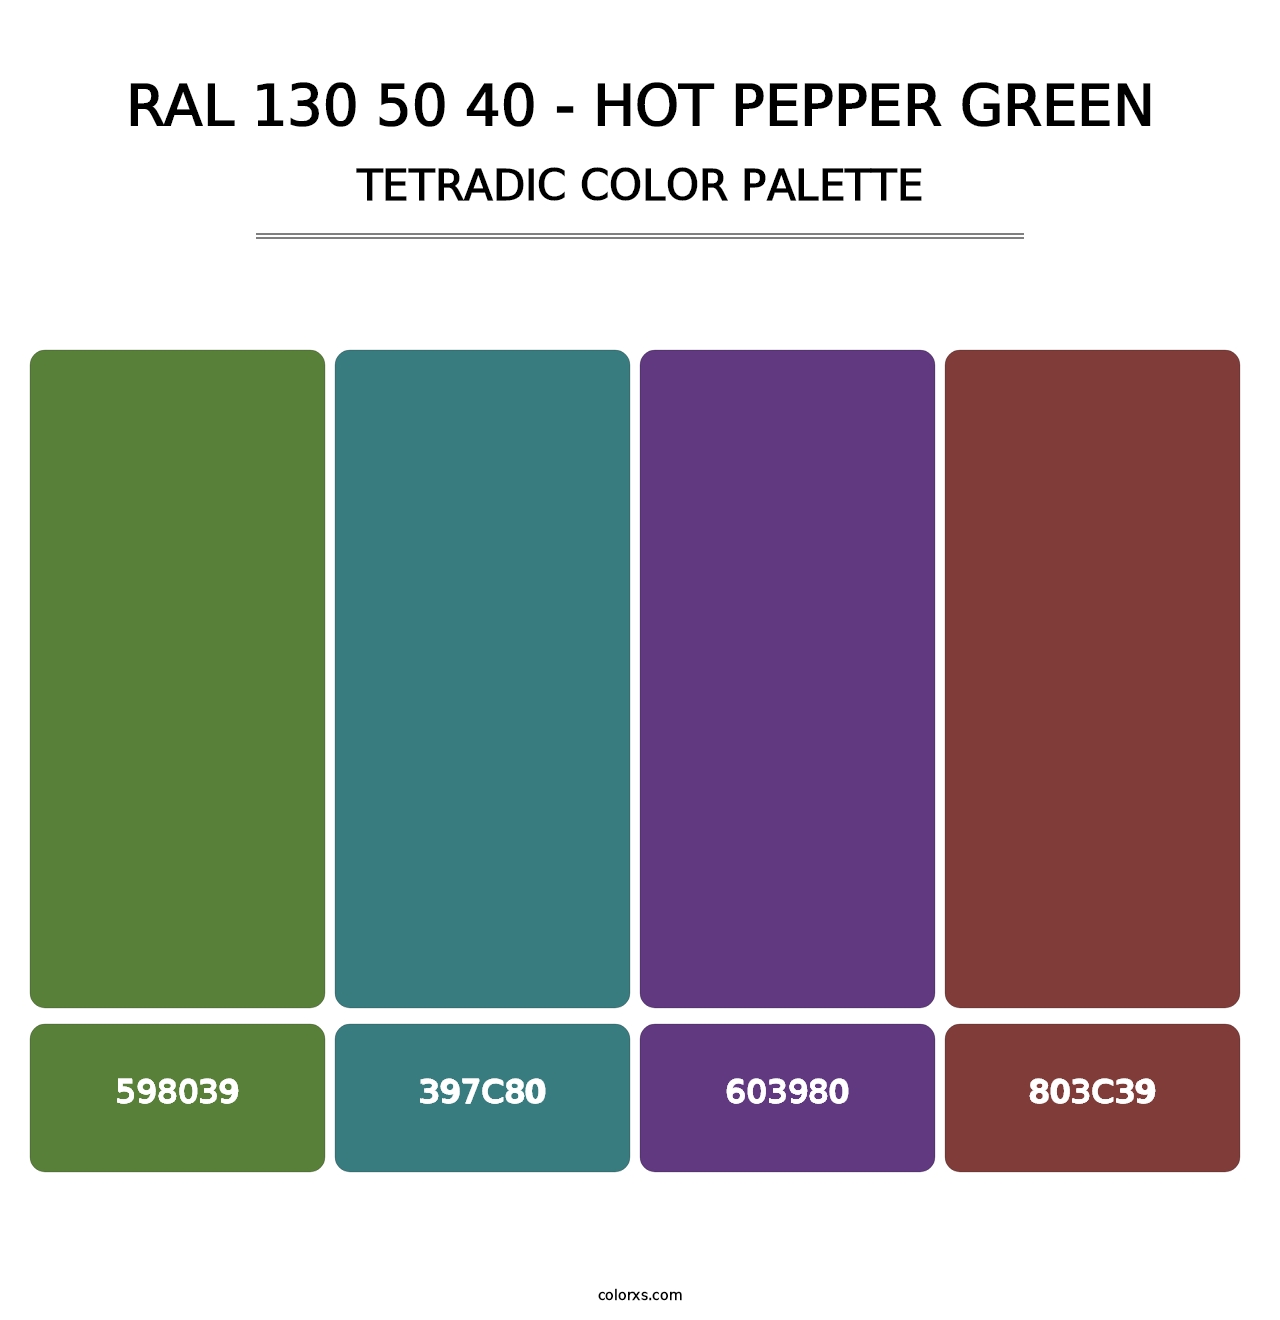 RAL 130 50 40 - Hot Pepper Green - Tetradic Color Palette